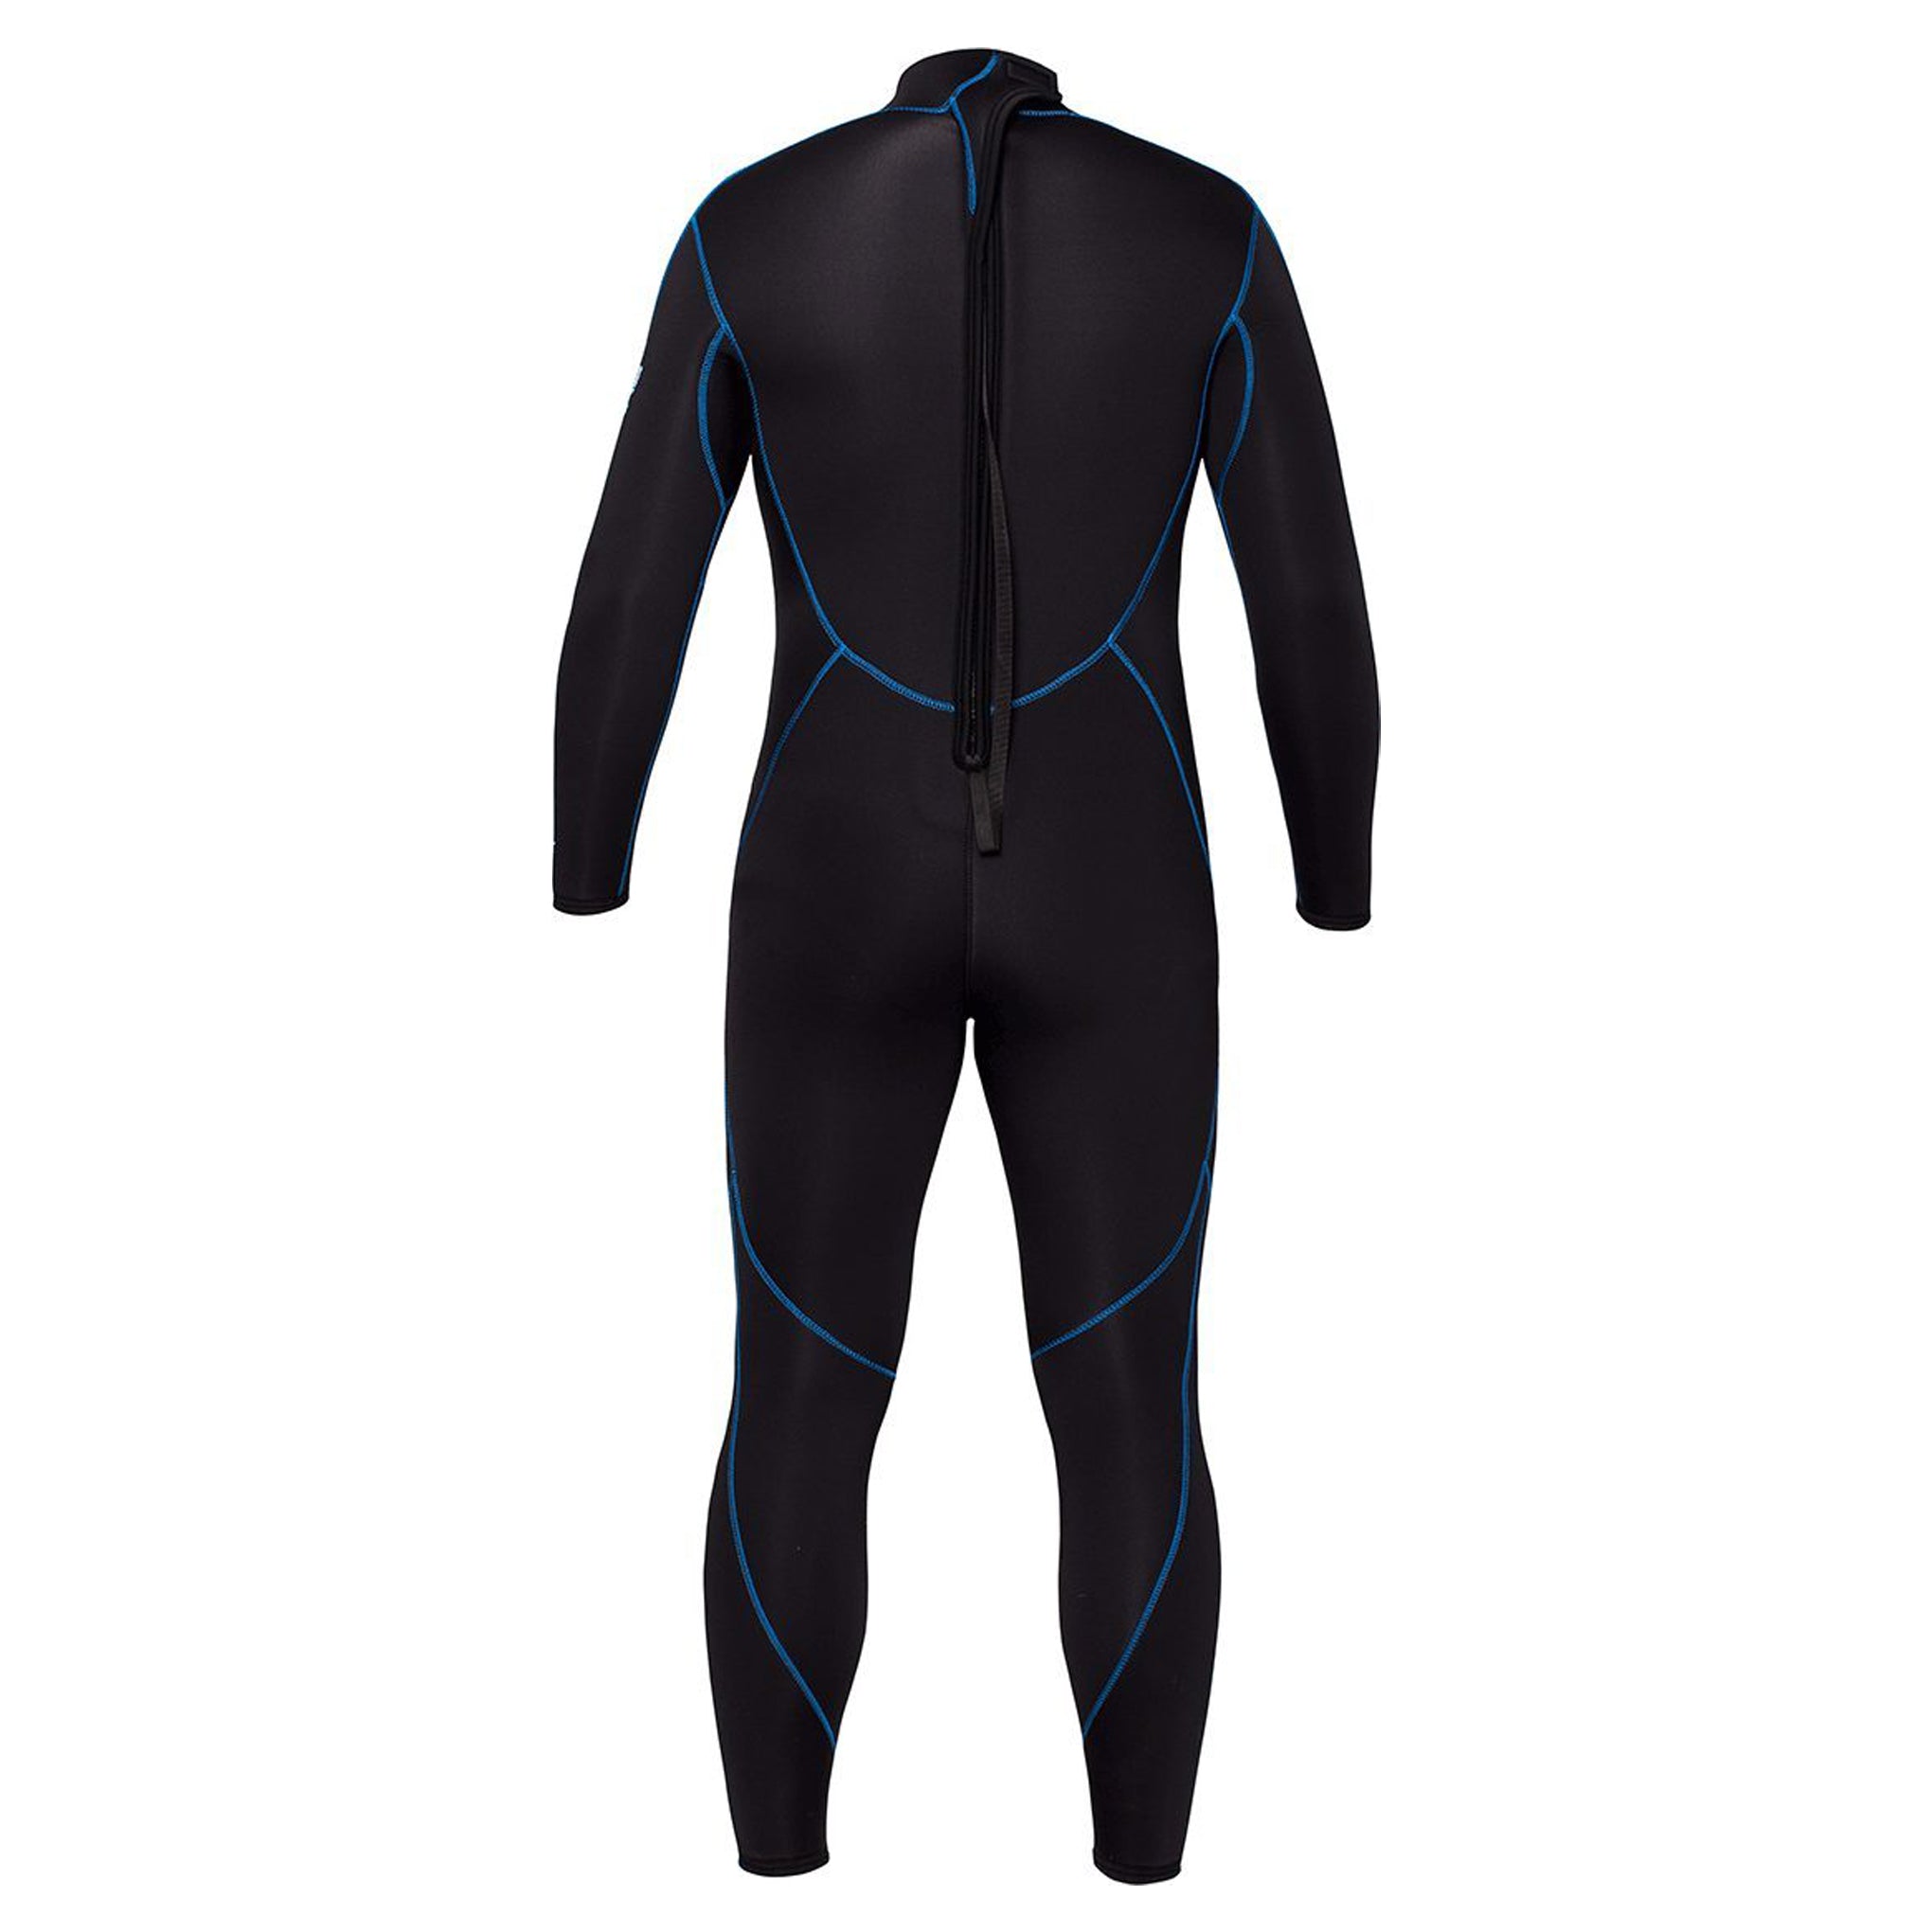 5mm Sport S-Flex Full - Men's-Wetsuits-Snorkeling, diver, sharkskin, scuba diving hk, warm protection, sharkskin, dive wear, bare wetsuit, aeroskin wetsuit, 浮潛